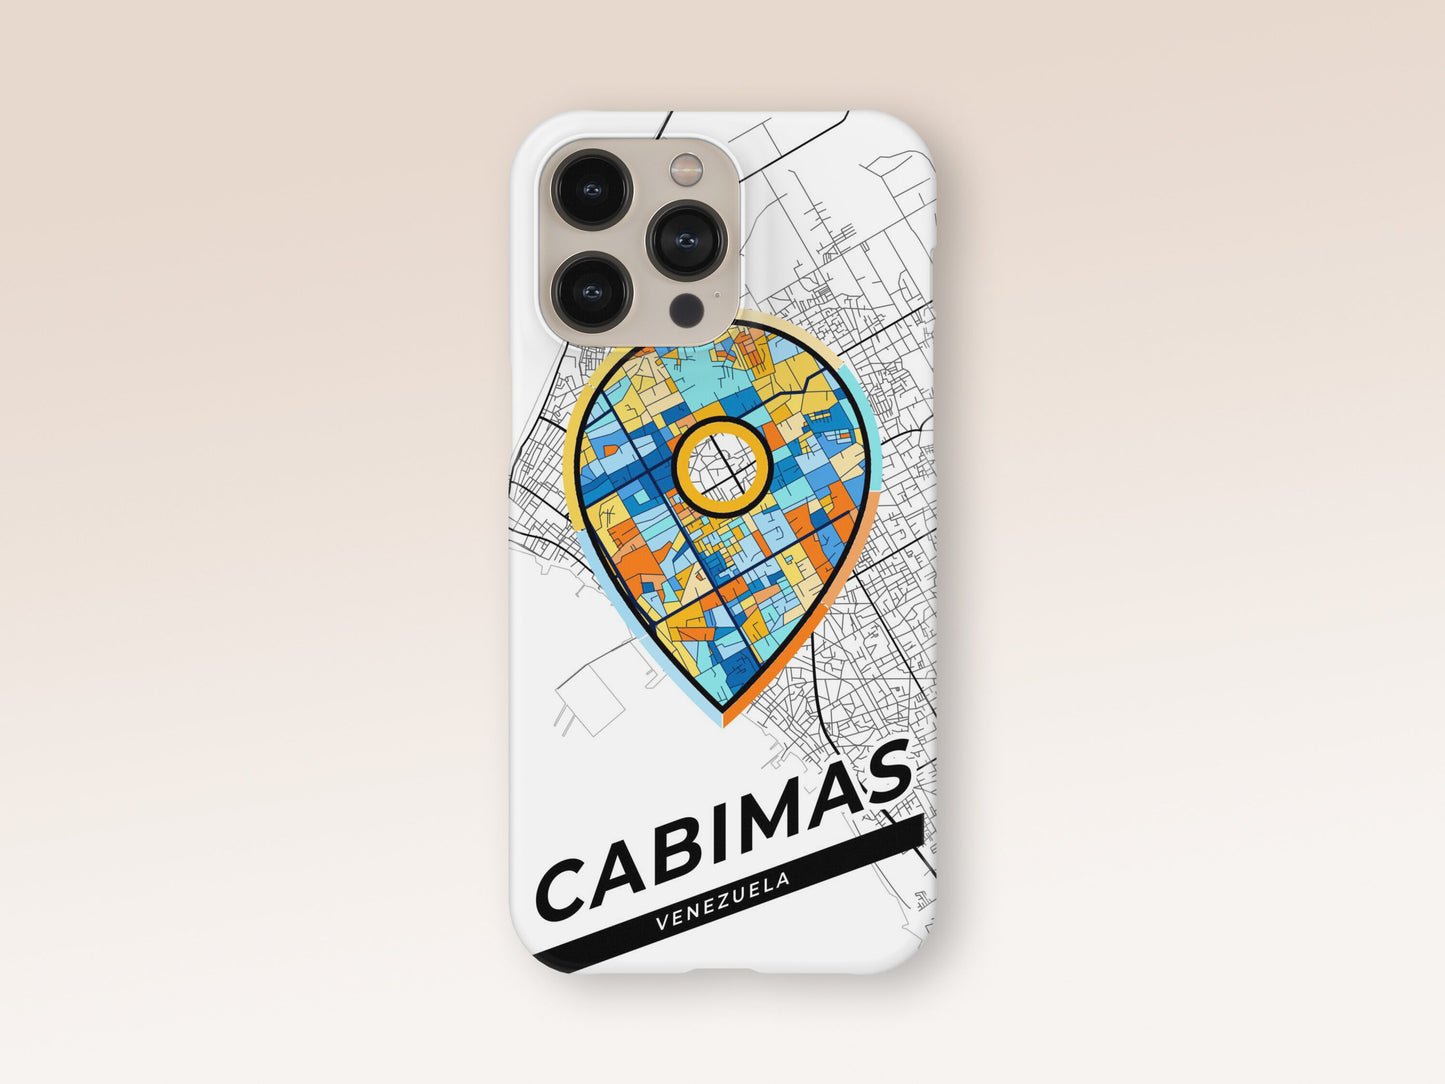 Cabimas Venezuela slim phone case with colorful icon. Birthday, wedding or housewarming gift. Couple match cases. 1